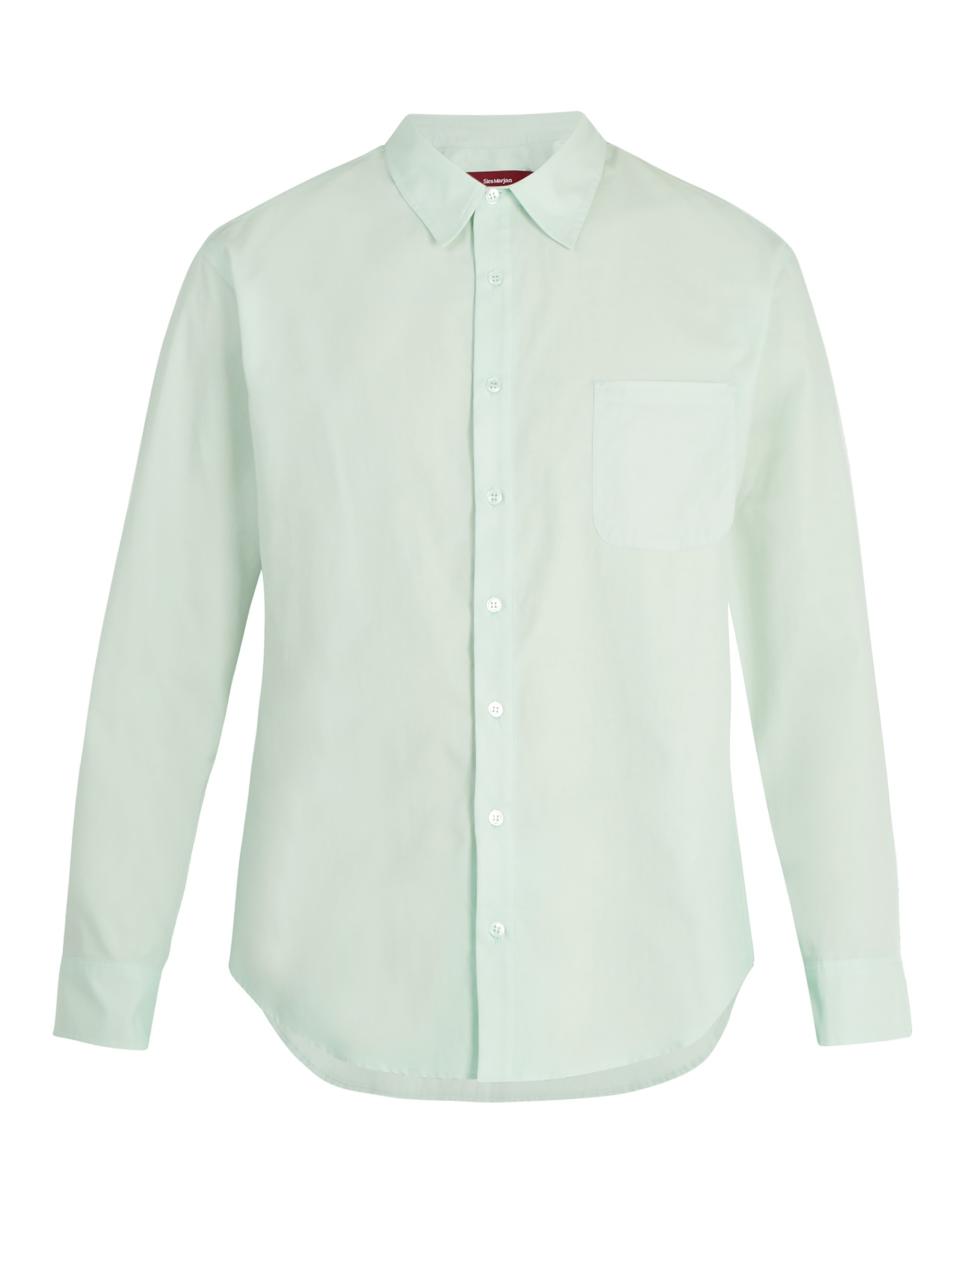 Sies Marjan green shirt (£410)